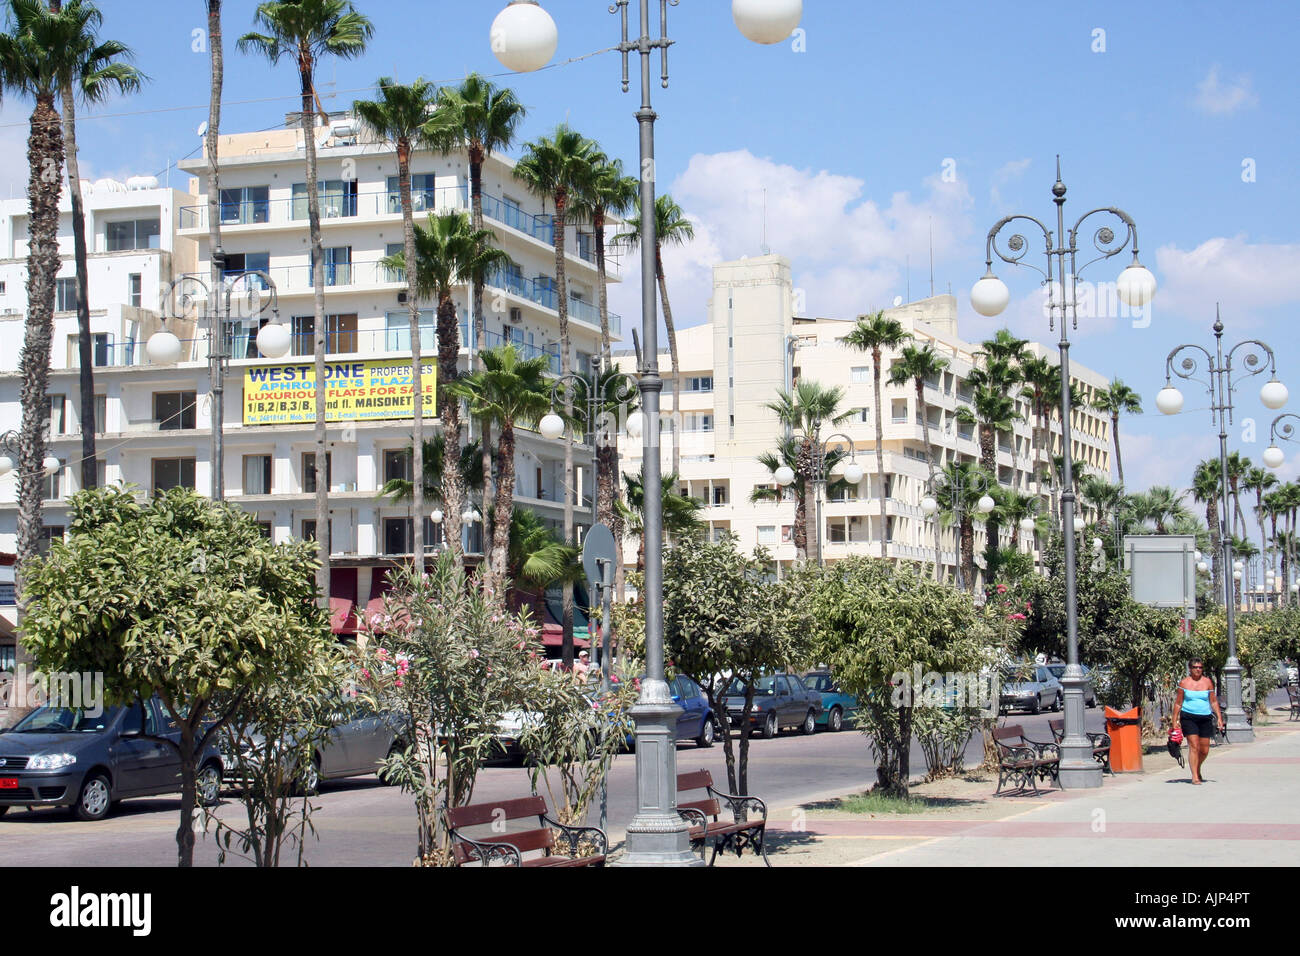 Ayia Napa Street Scene on island of Cyprus. Here is the main boulevard by the ocean promenade. Stock Photo